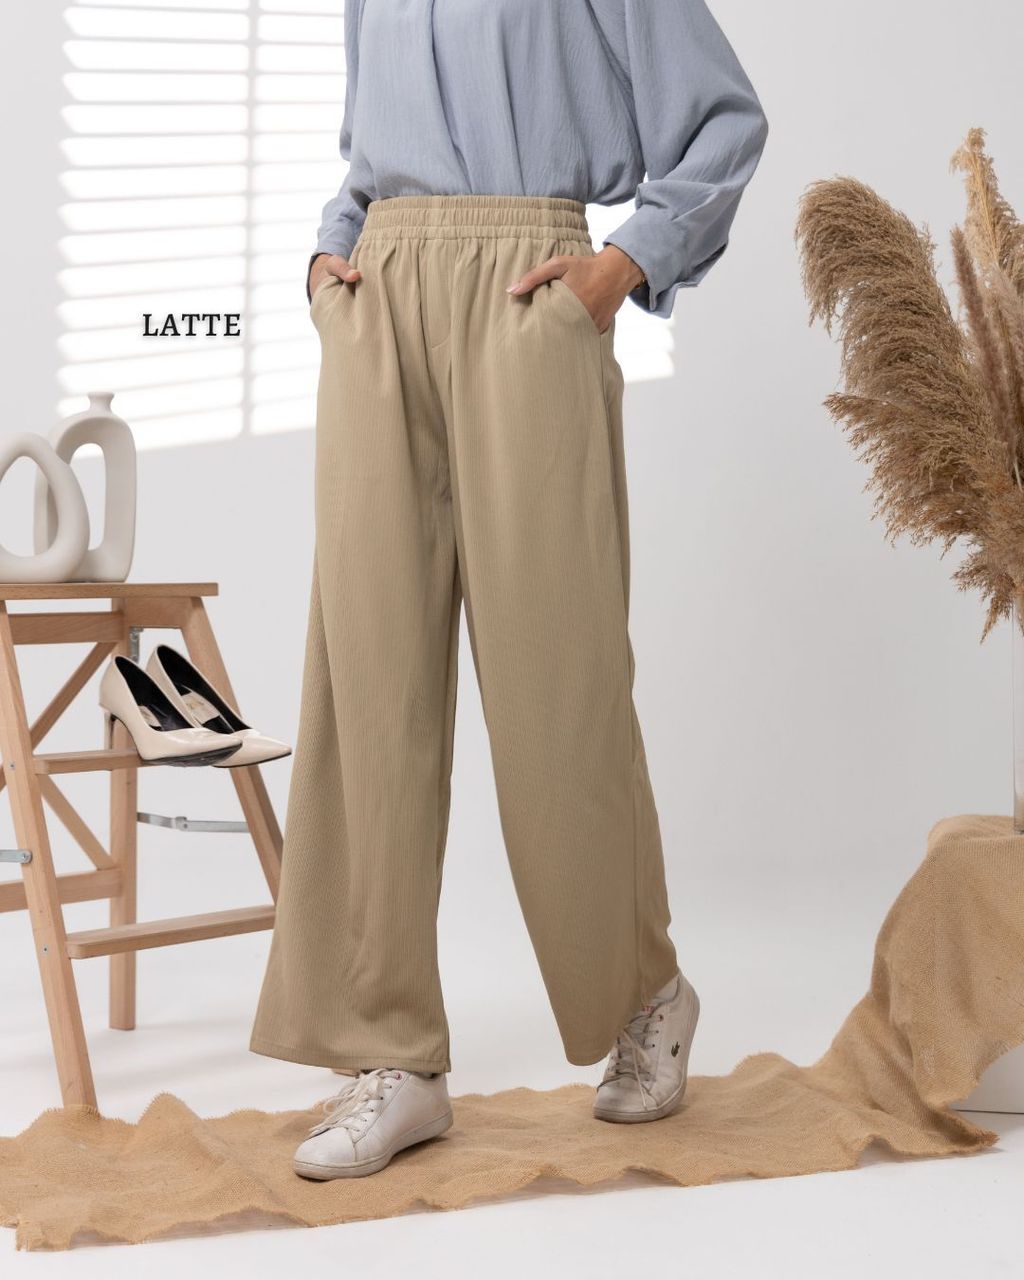 haura-wear-beth-palazzo-cotton-pants-high-waist-cotton-long-pants-seluar-muslimah-seluar-perempuan-palazzo-pants-sluar-skirt (6)